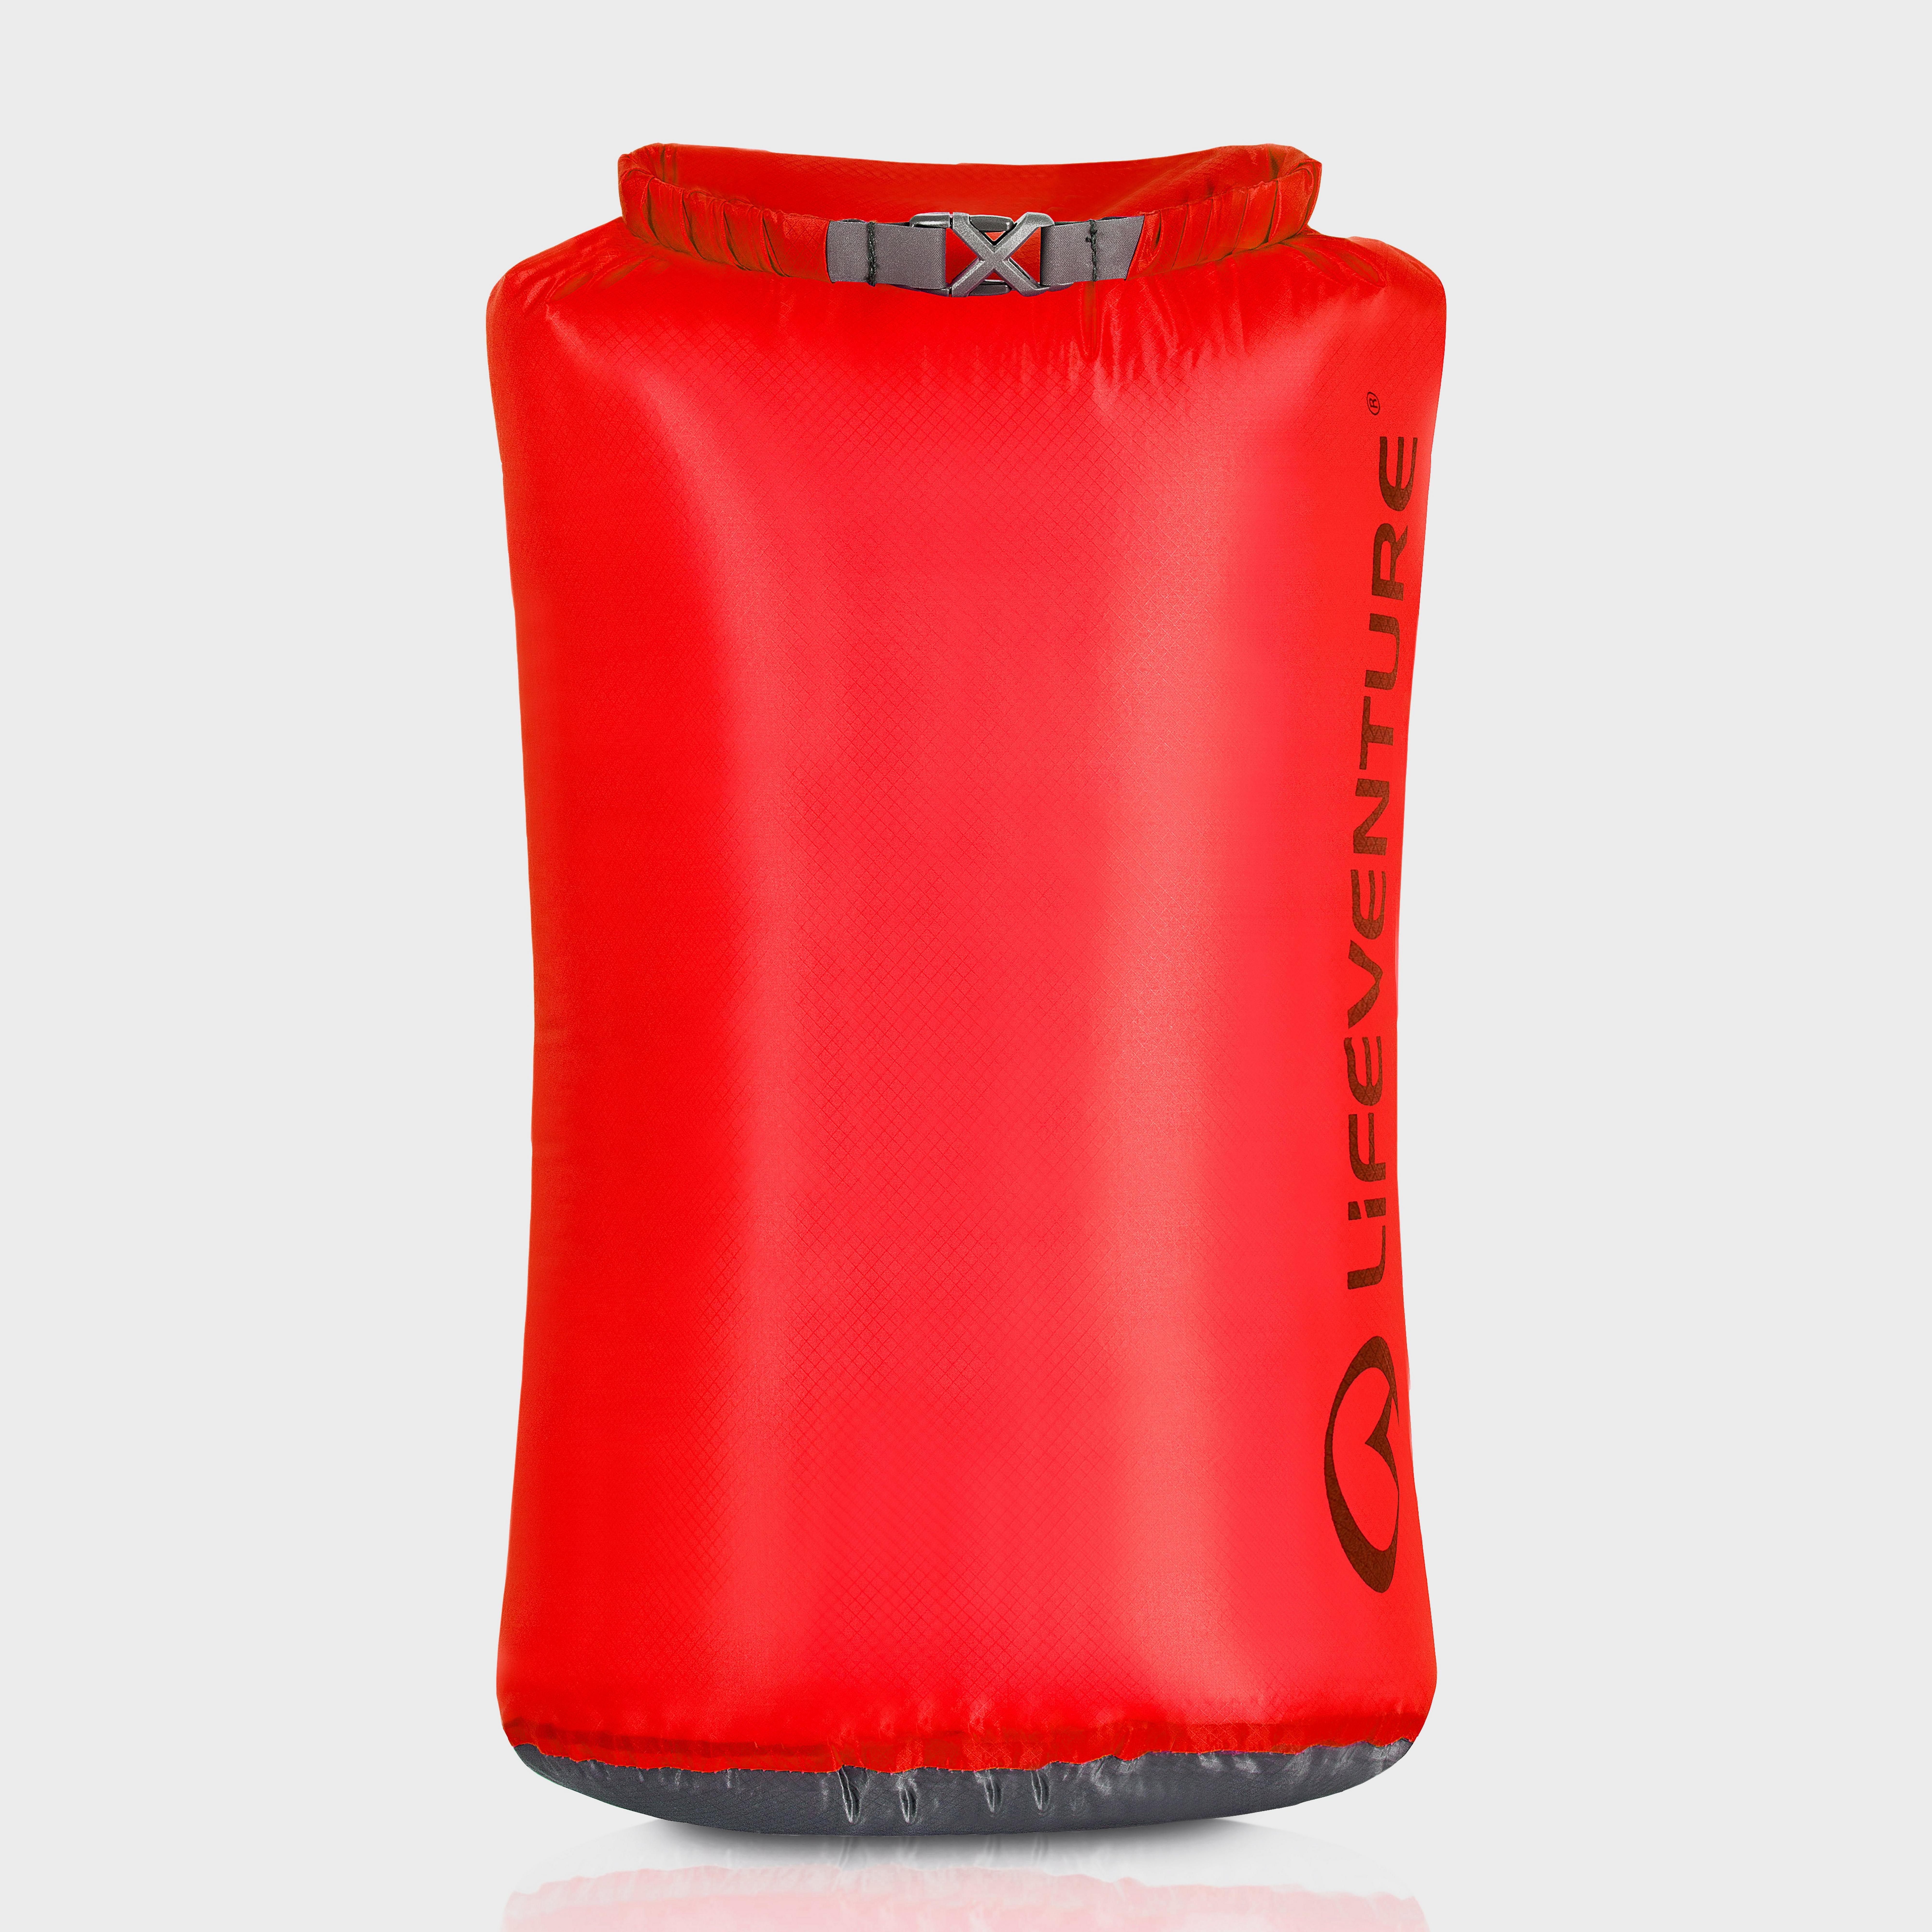 Lifeventure Ultralight 25l Dry Bag - Red/25l  Red/25l